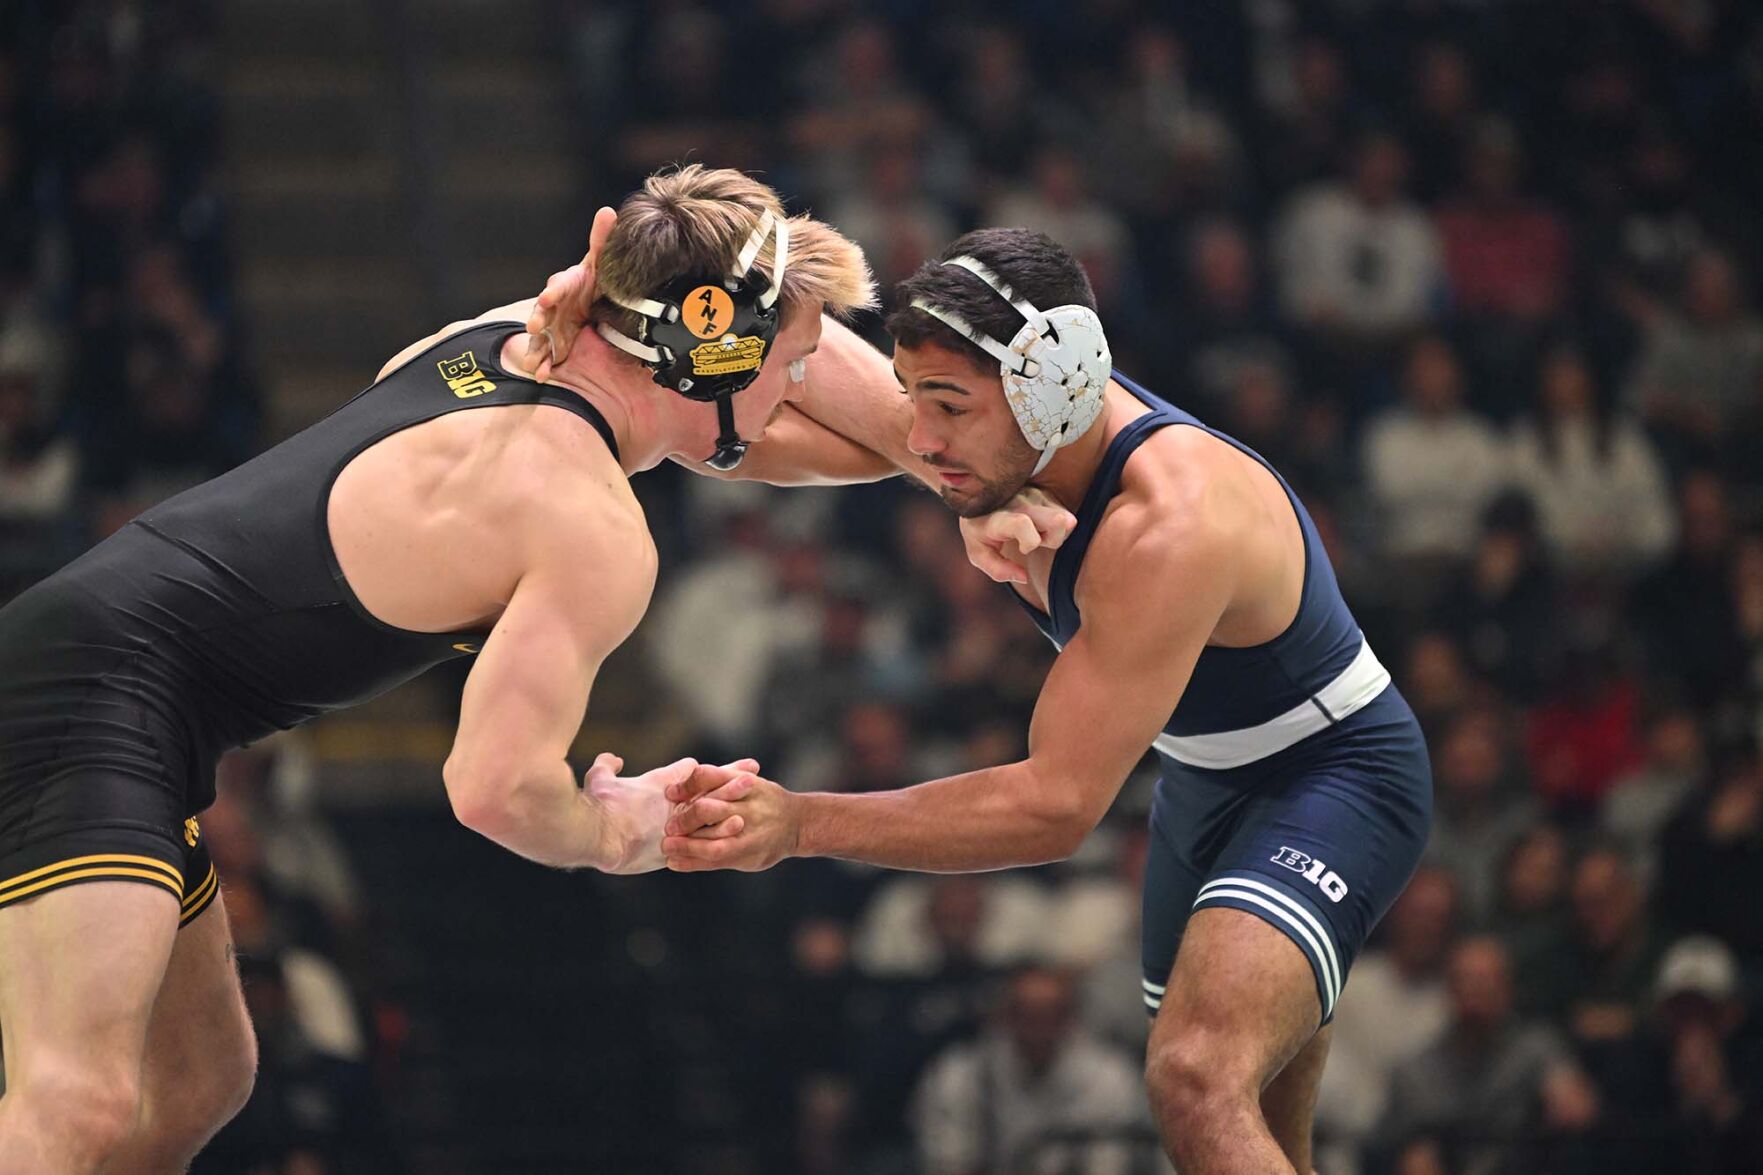 NCAA wrestling Iowas Murin advances to quarterfinals, will face three-time champion Sports tribdem